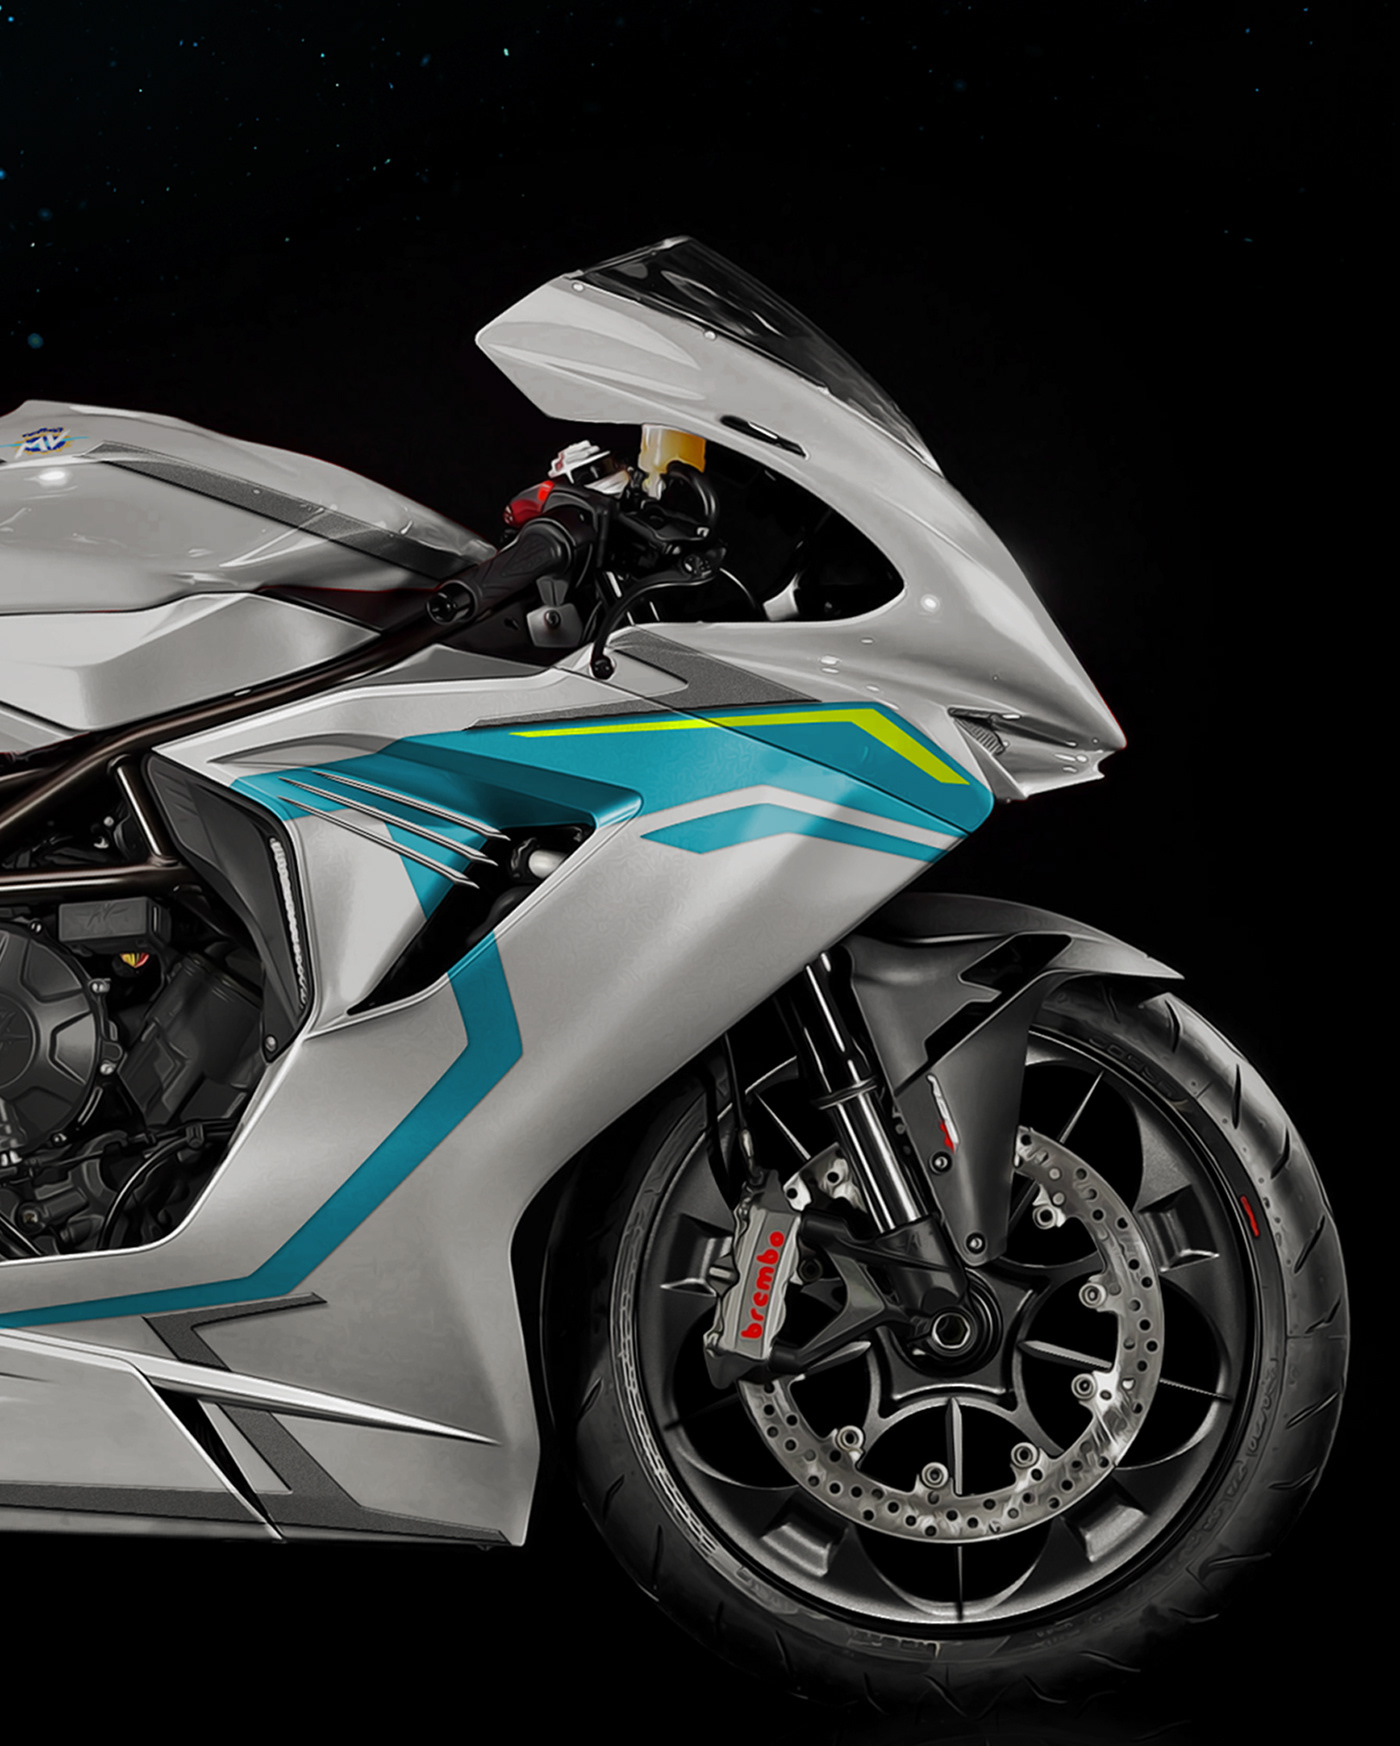 cosmogonie cosmogony designer evdomos motorcycle art mv agusta MV Agusta F3 Simon Designs